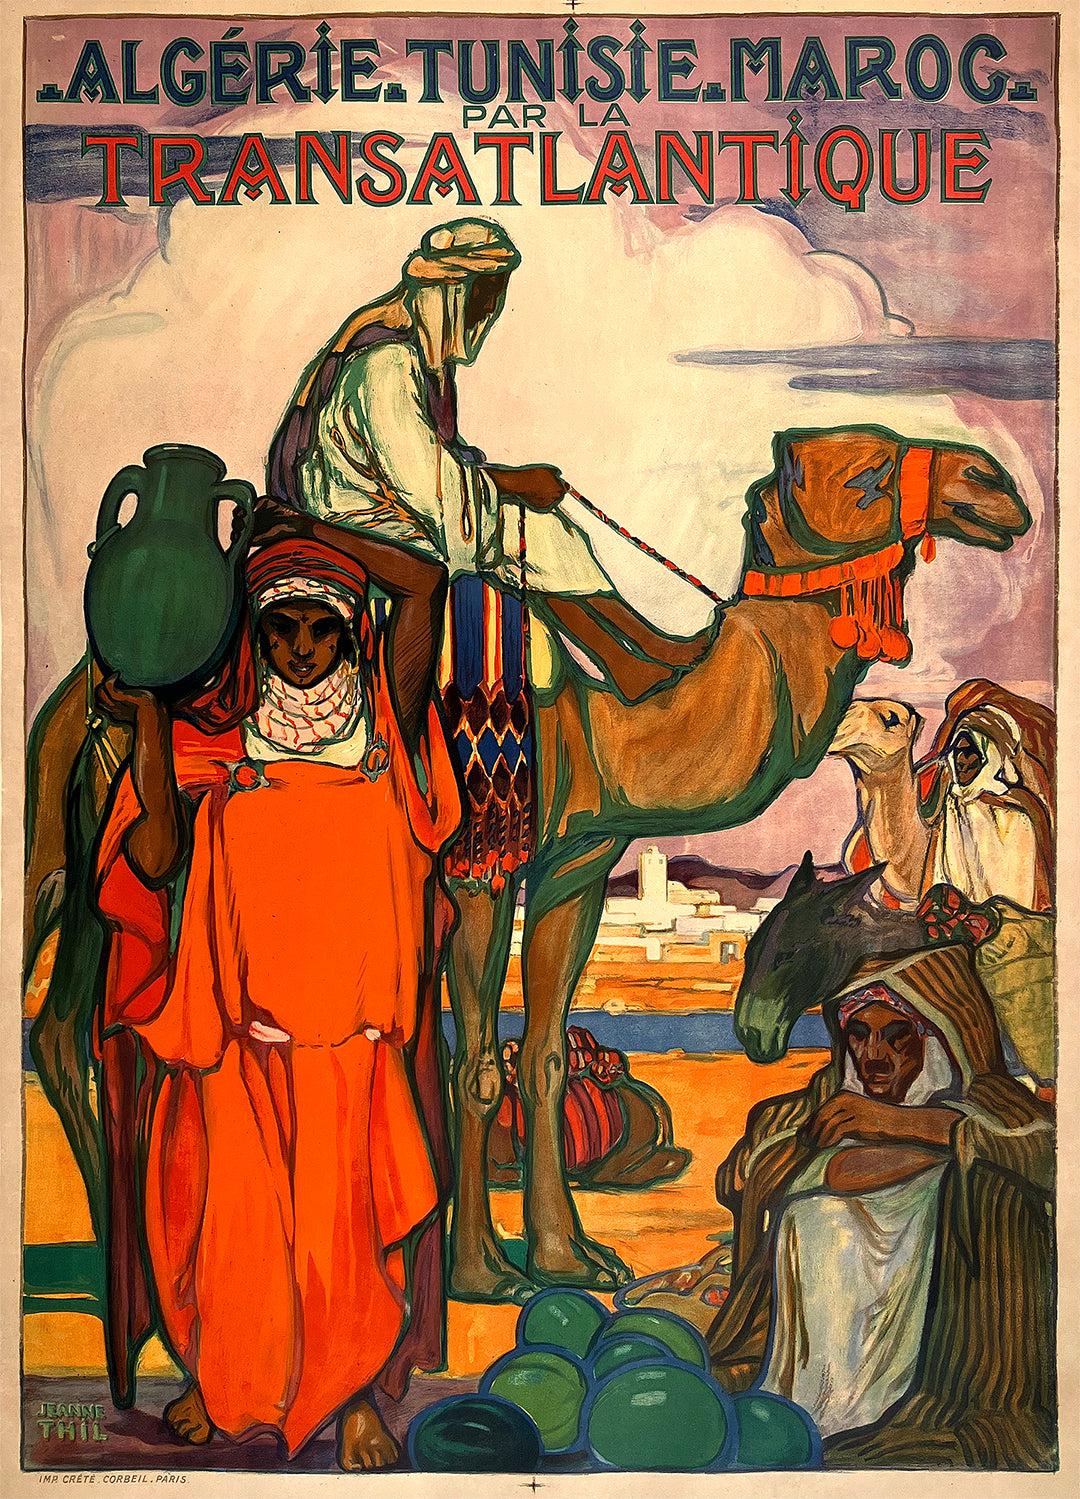 Original Vintage Transatlantique Algerie Tunisie Maroc Poster by Jeanne Thil c1925